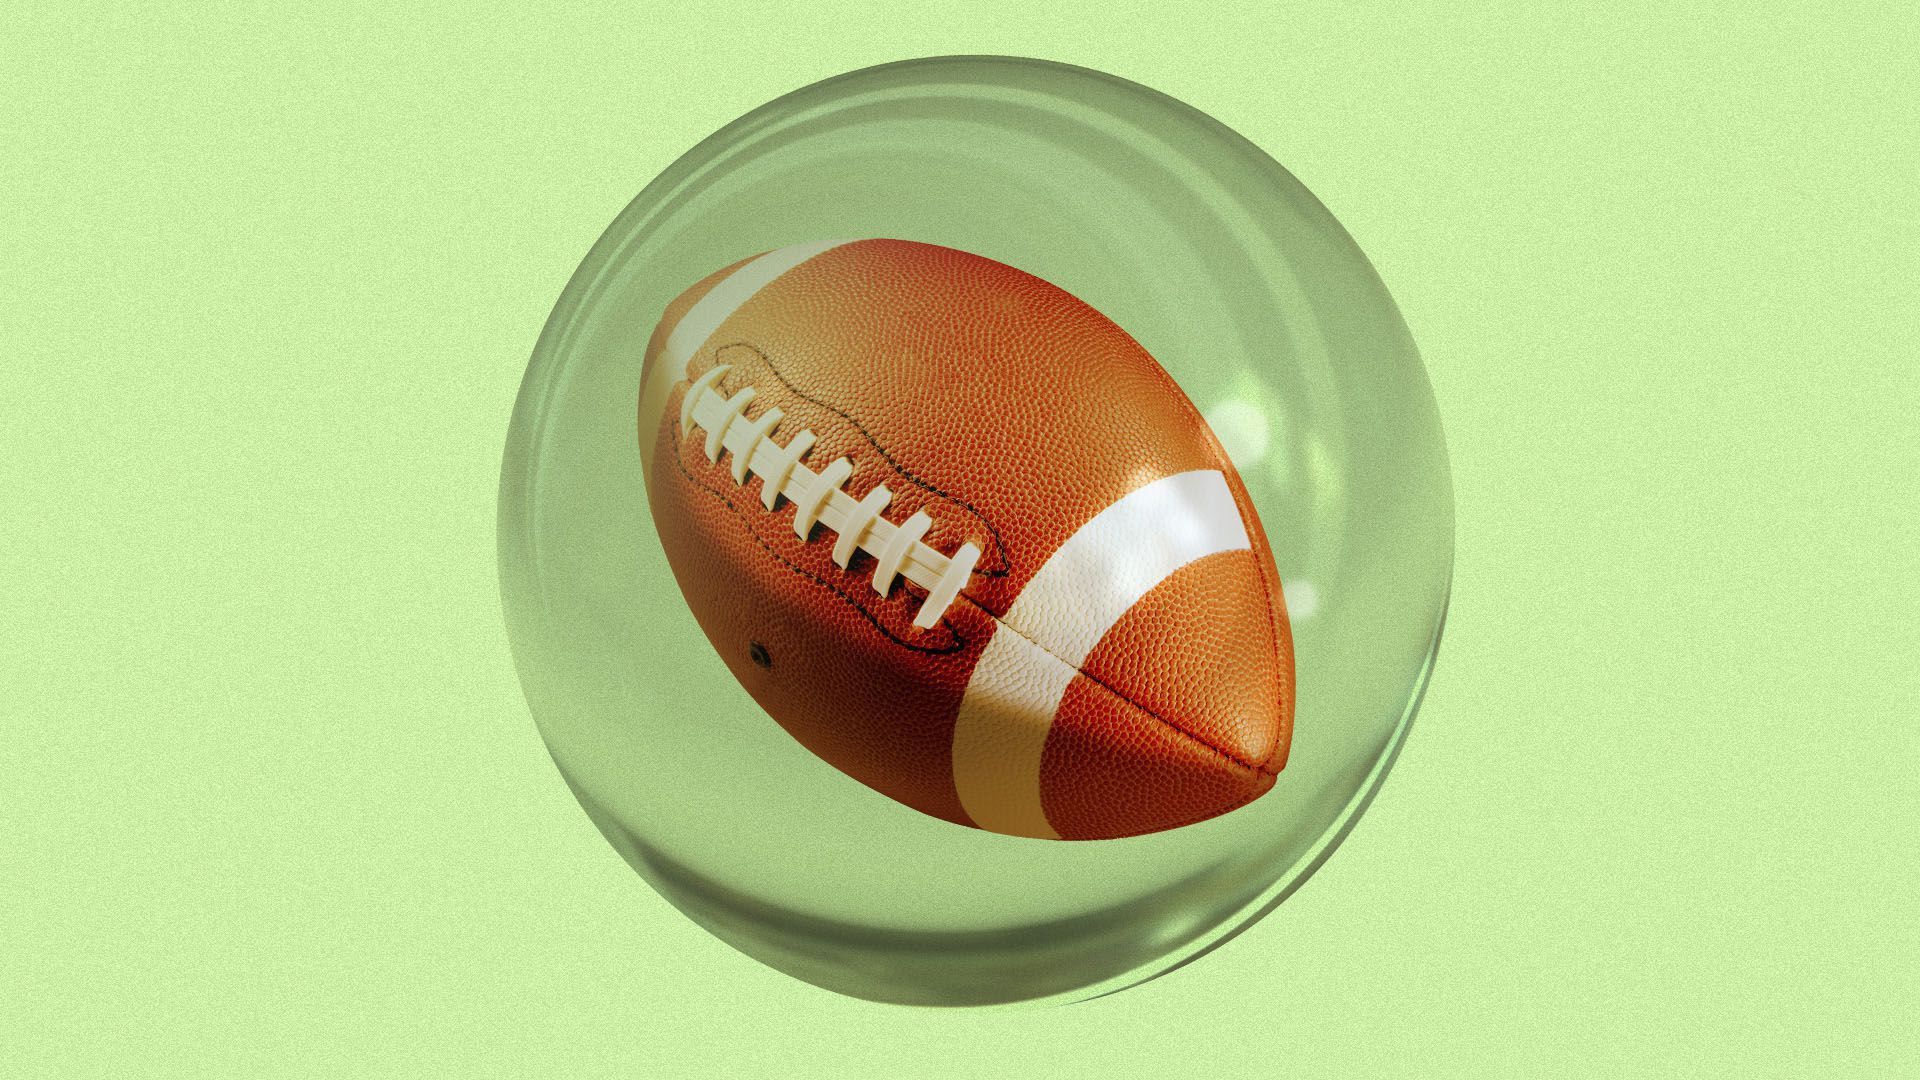 An illustration of a football inside a bubble